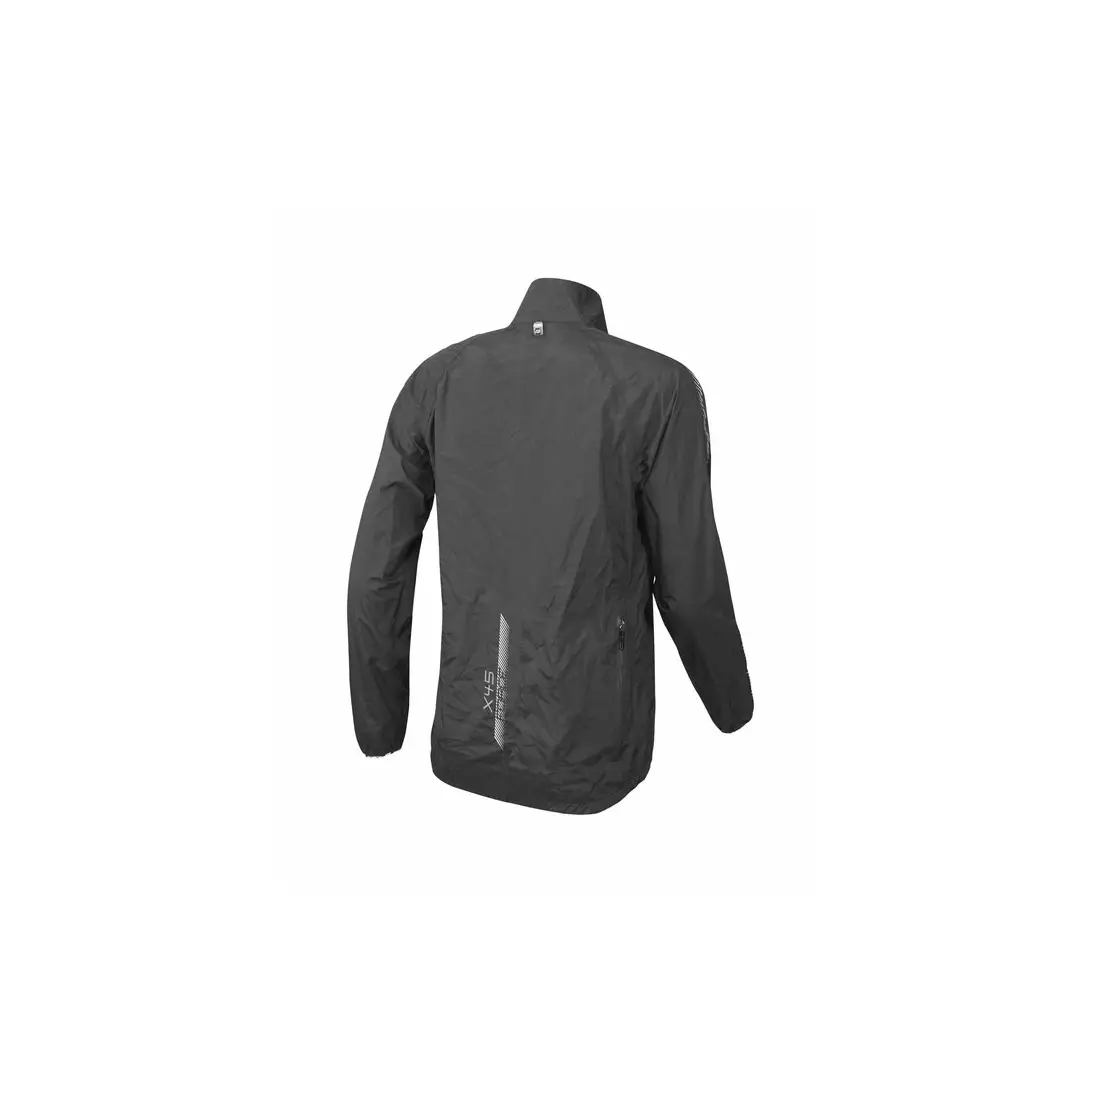 FORCE X45 rain cycling jacket, black 899750